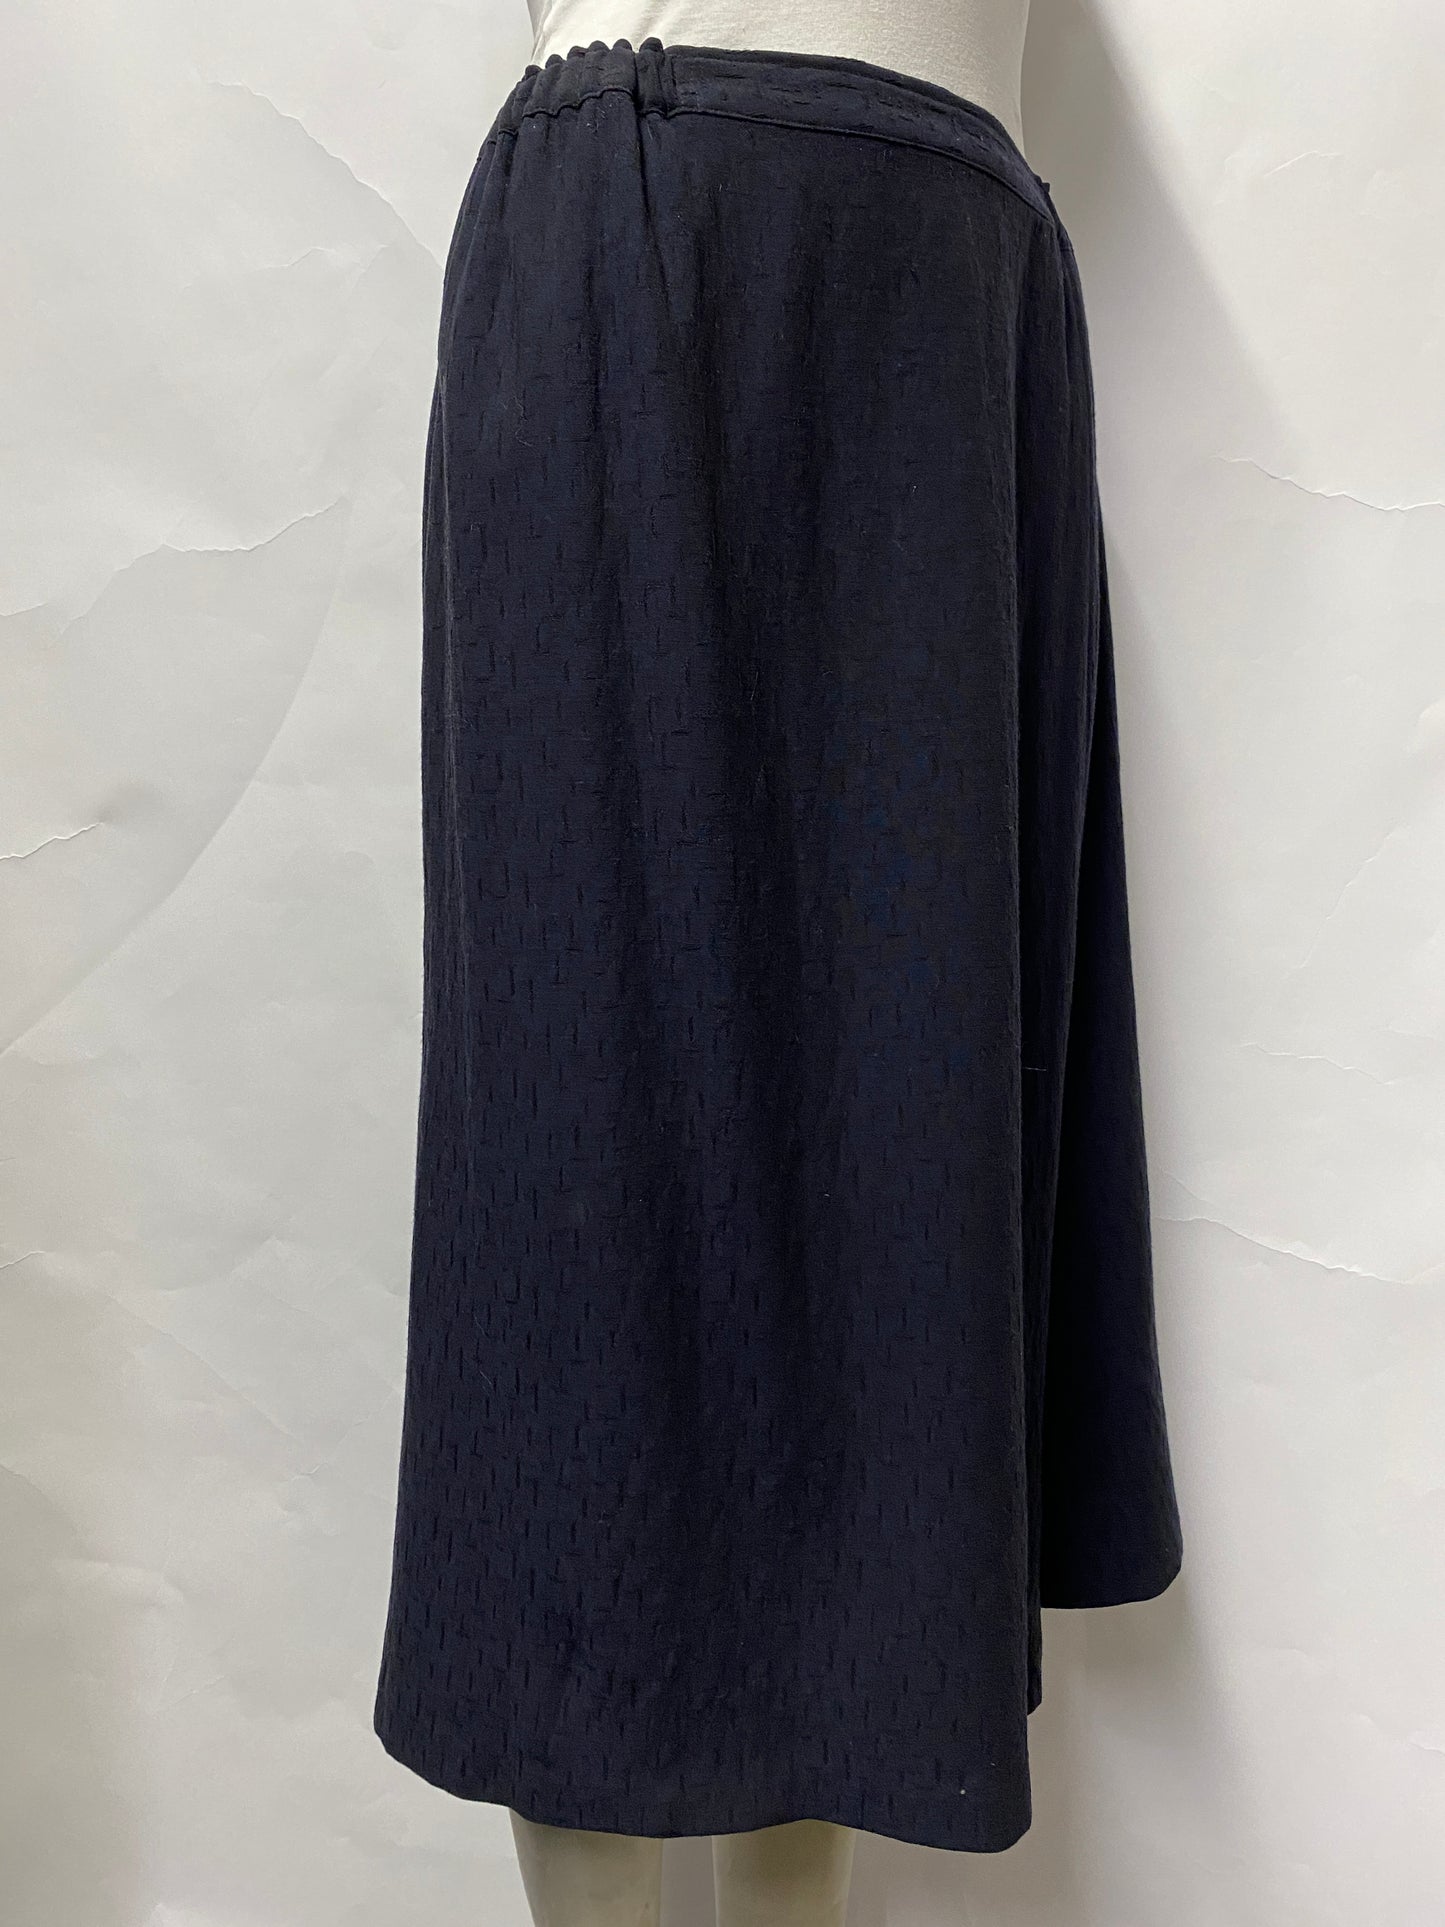 Shrin Guild Navy Wool A-line Skirt Small